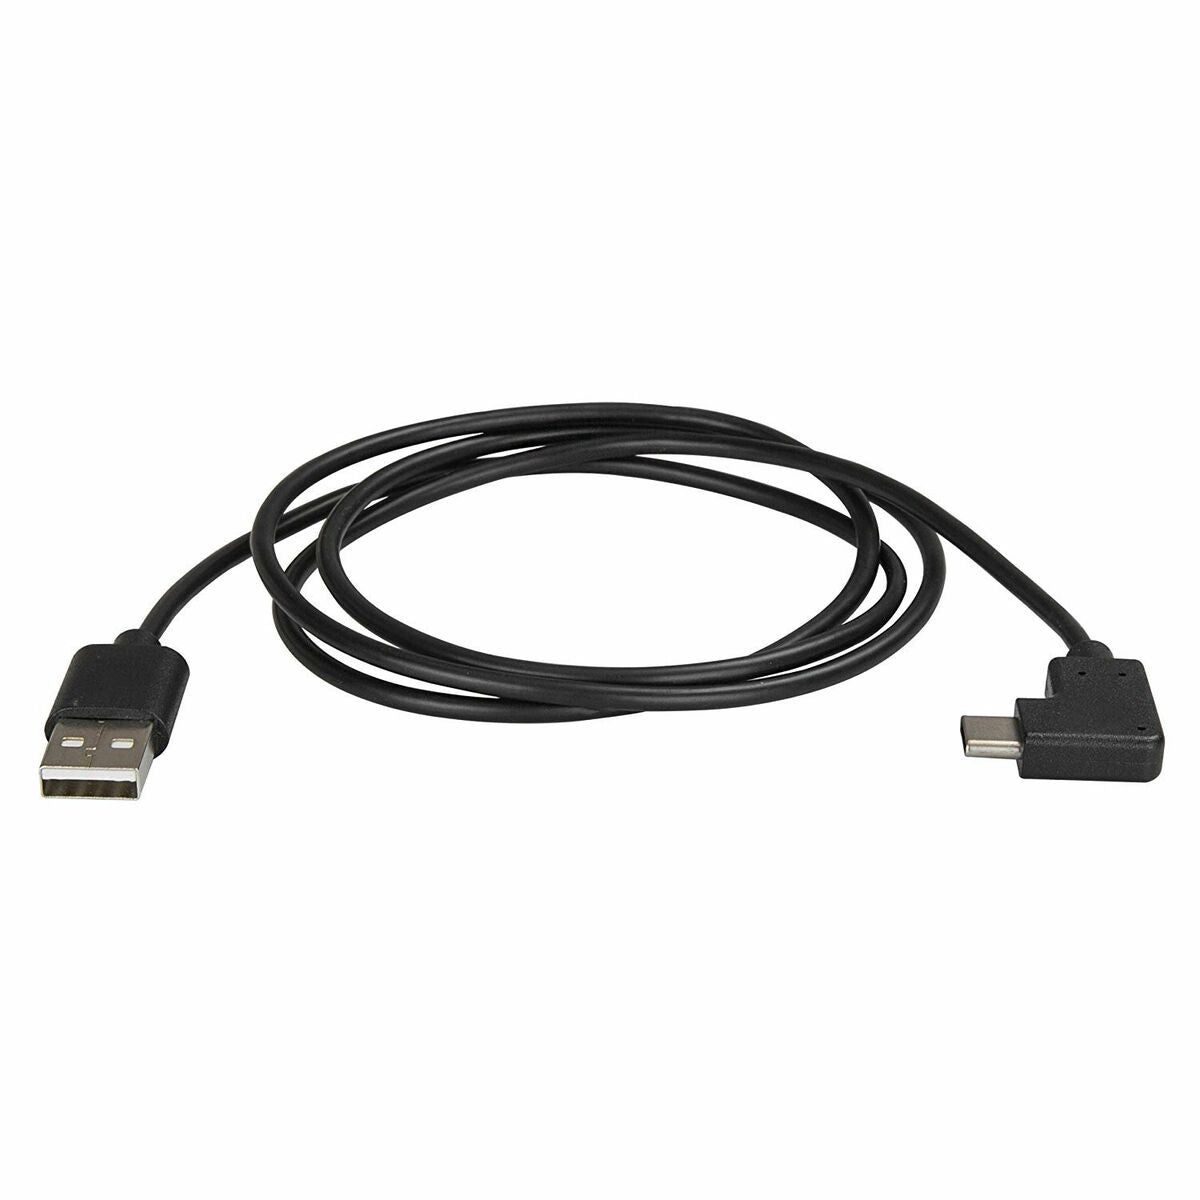 USB A to USB C Cable Startech USB2AC1MR Black